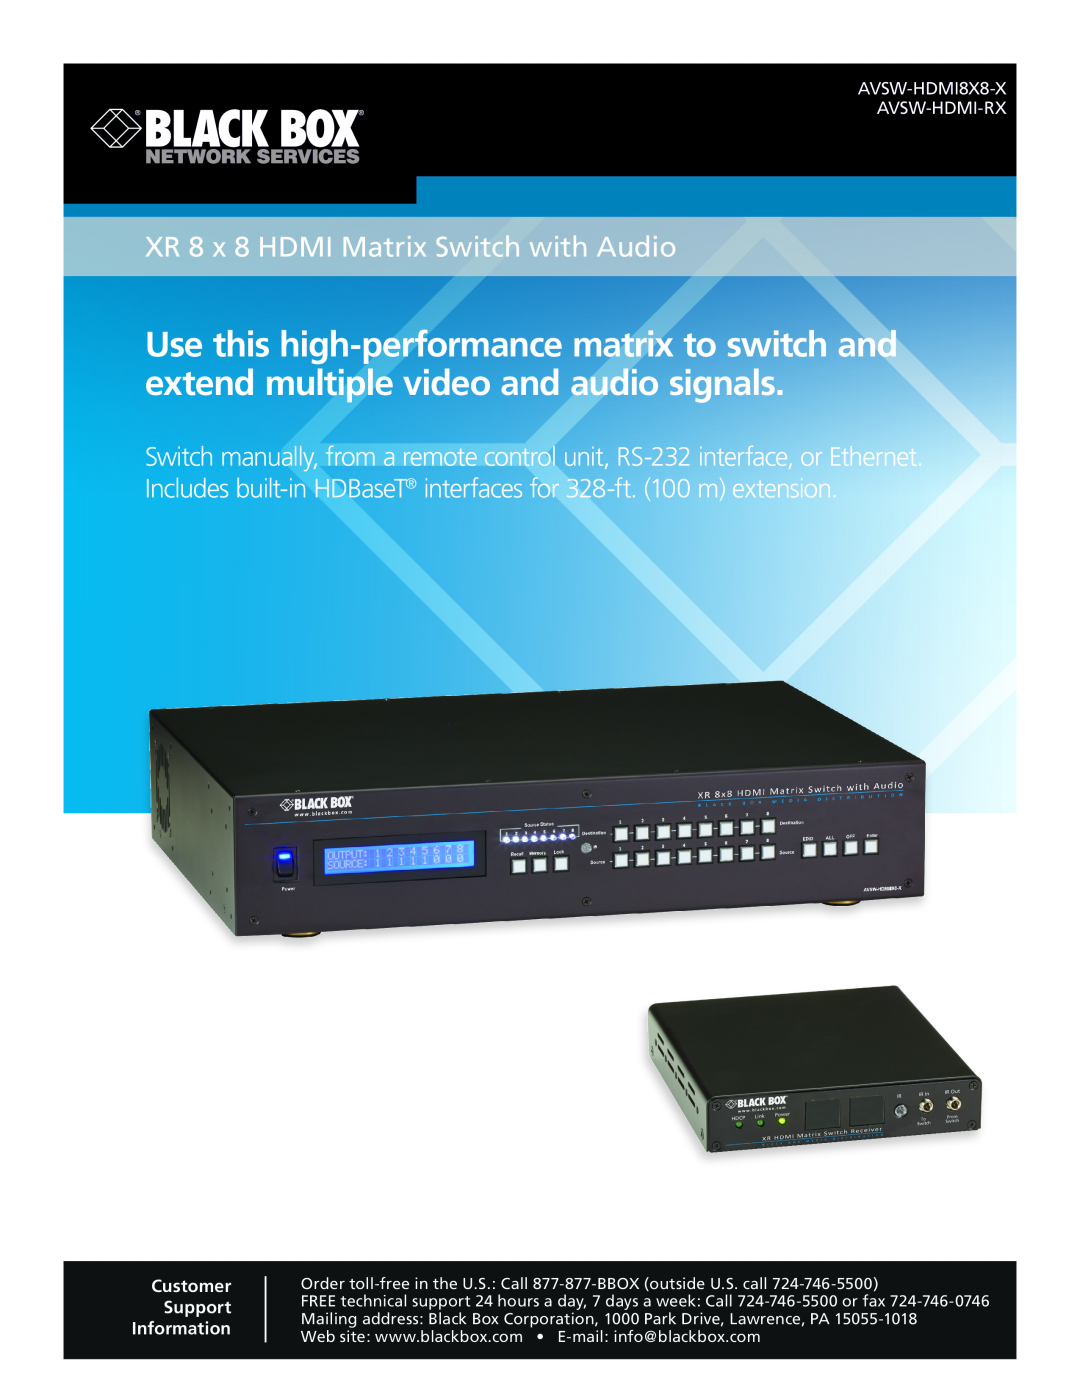 Black Box manual XR 8 x 8 HDMI Matrix Switch with Audio, AVSW-HDMI8X8-X AVSW-HDMI-RX, Customer Support Information 